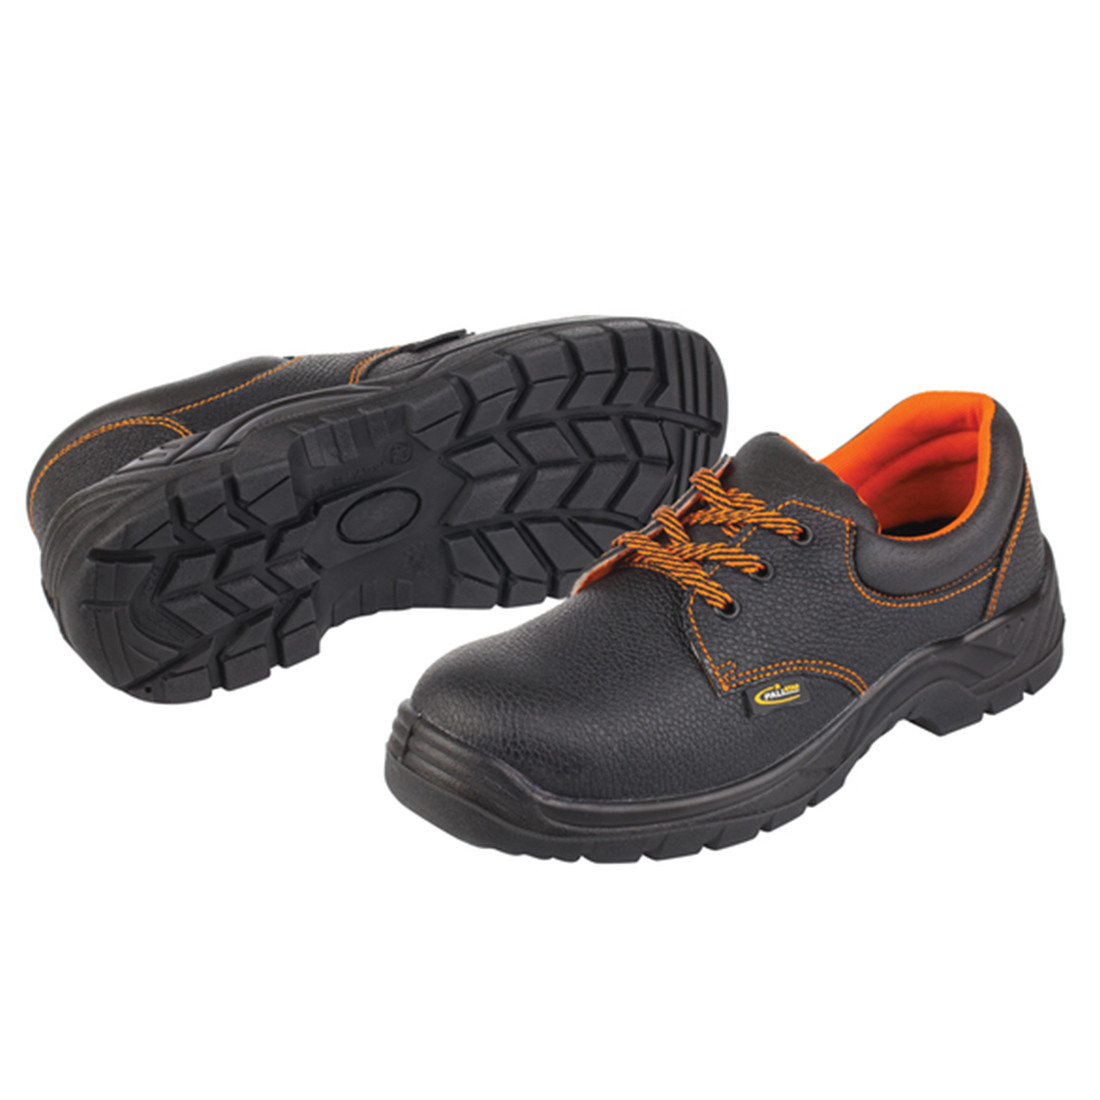 Pantofi S1 VIPER - Incaltaminte de protectie | Bocanci, Pantofi, Sandale, Cizme